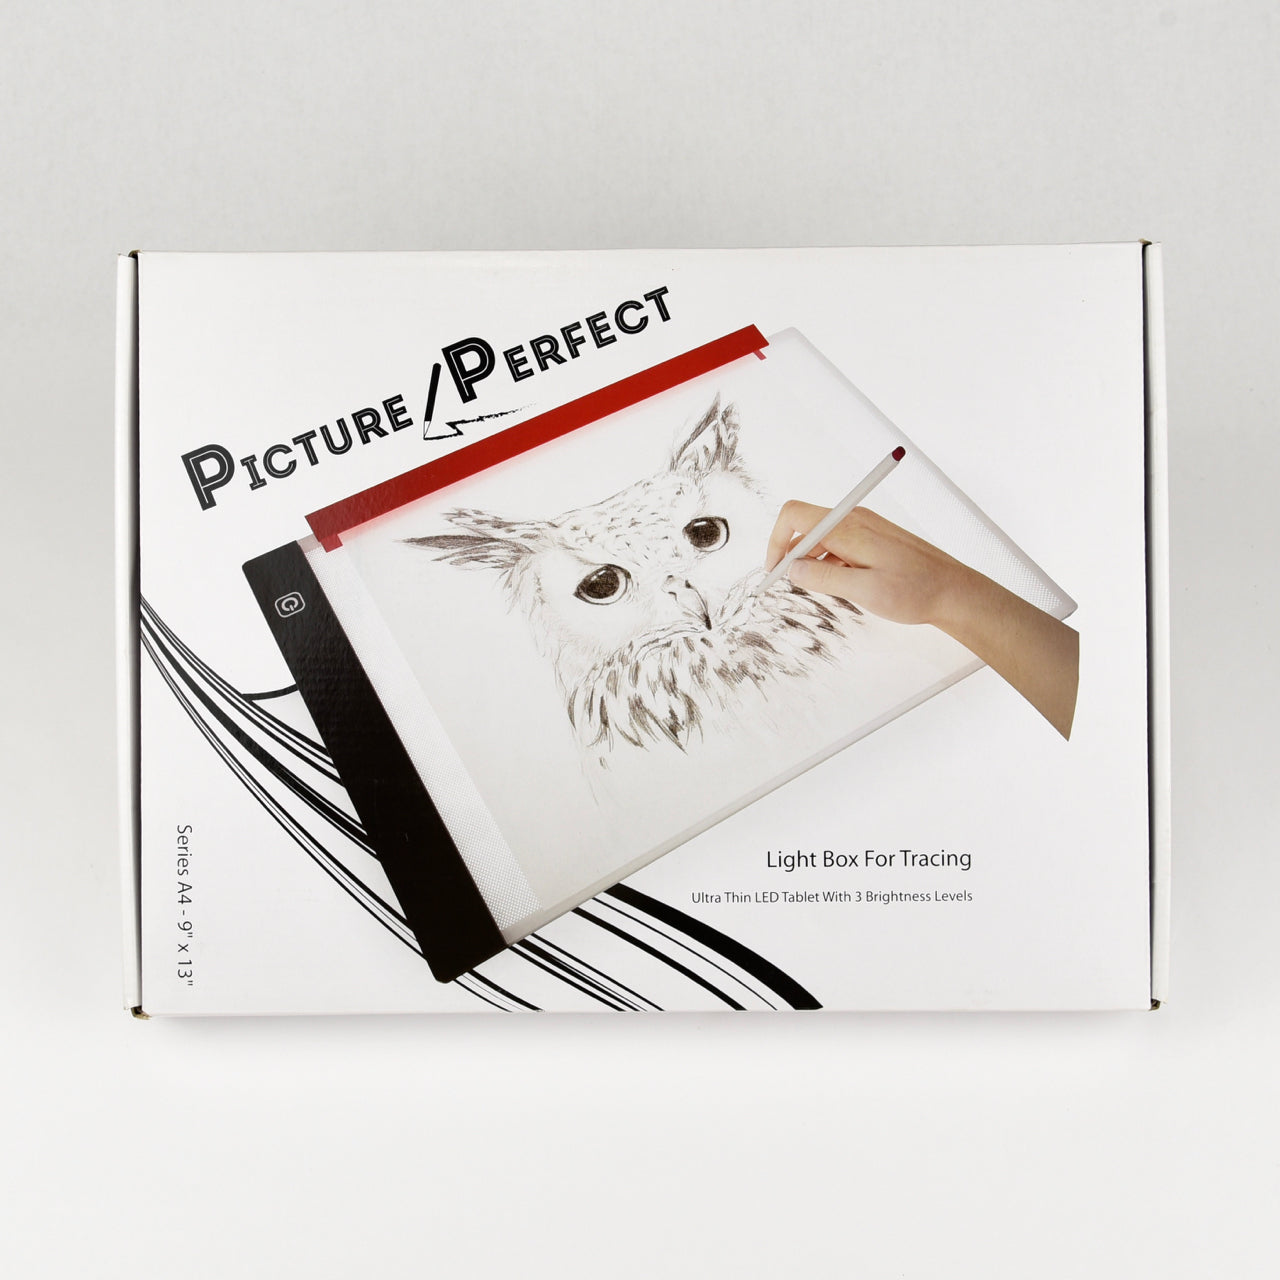 Picture Perfect Light Box – The Oxford Company, LLC